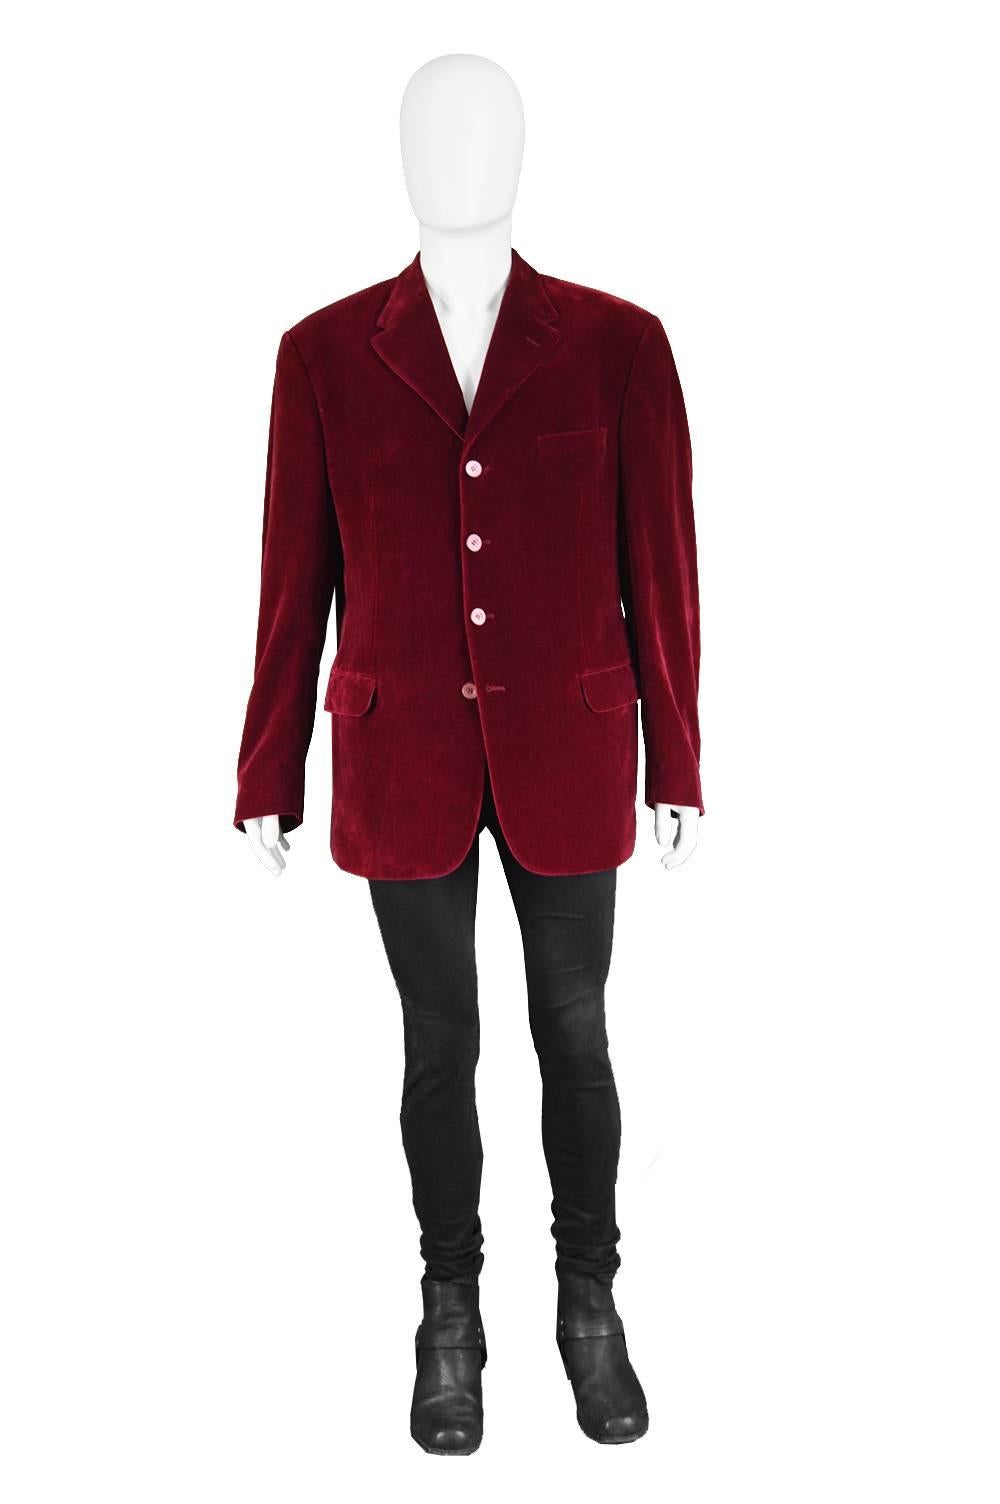 Gianni Versace Versus Men's Dark Red Velvet Vintage Blazer Jacket, 1990s

Size: Marked 54 which is roughly a men's Large to XL. Please check measurements. 
Chest - 44” / 112cm
Waist - 42” / 106cm
Length (Shoulder to Hem) - 30” / 76cm
Shoulder to